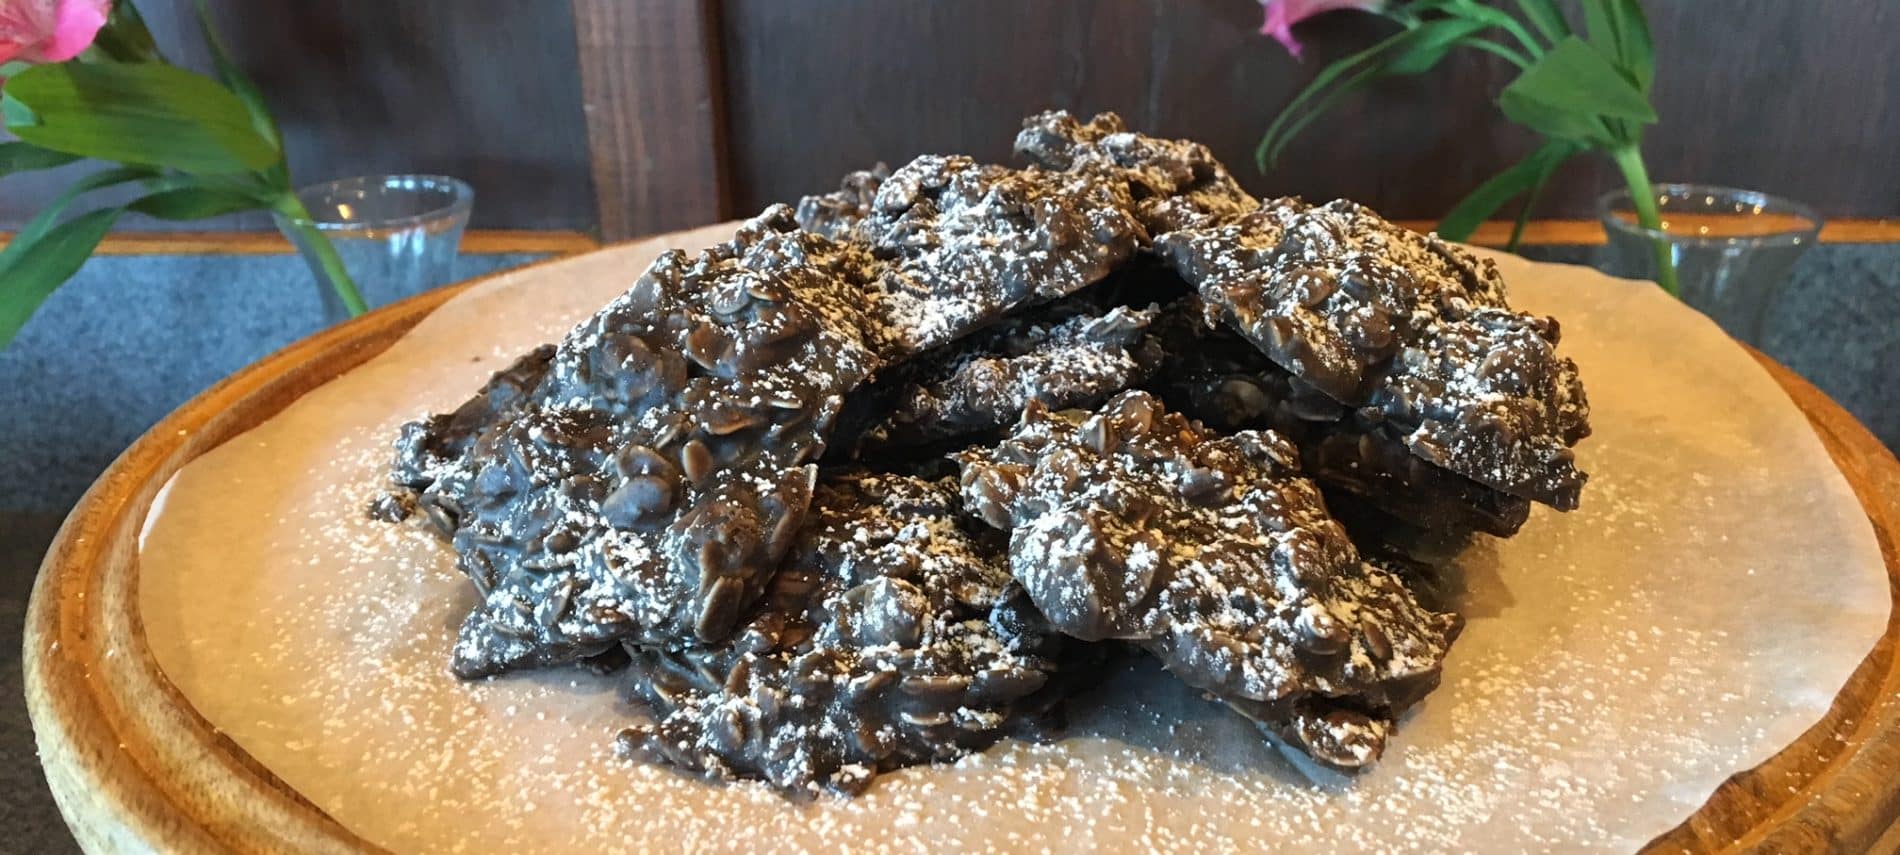 Platter with an arrangement of the chocolate vegan cookies.